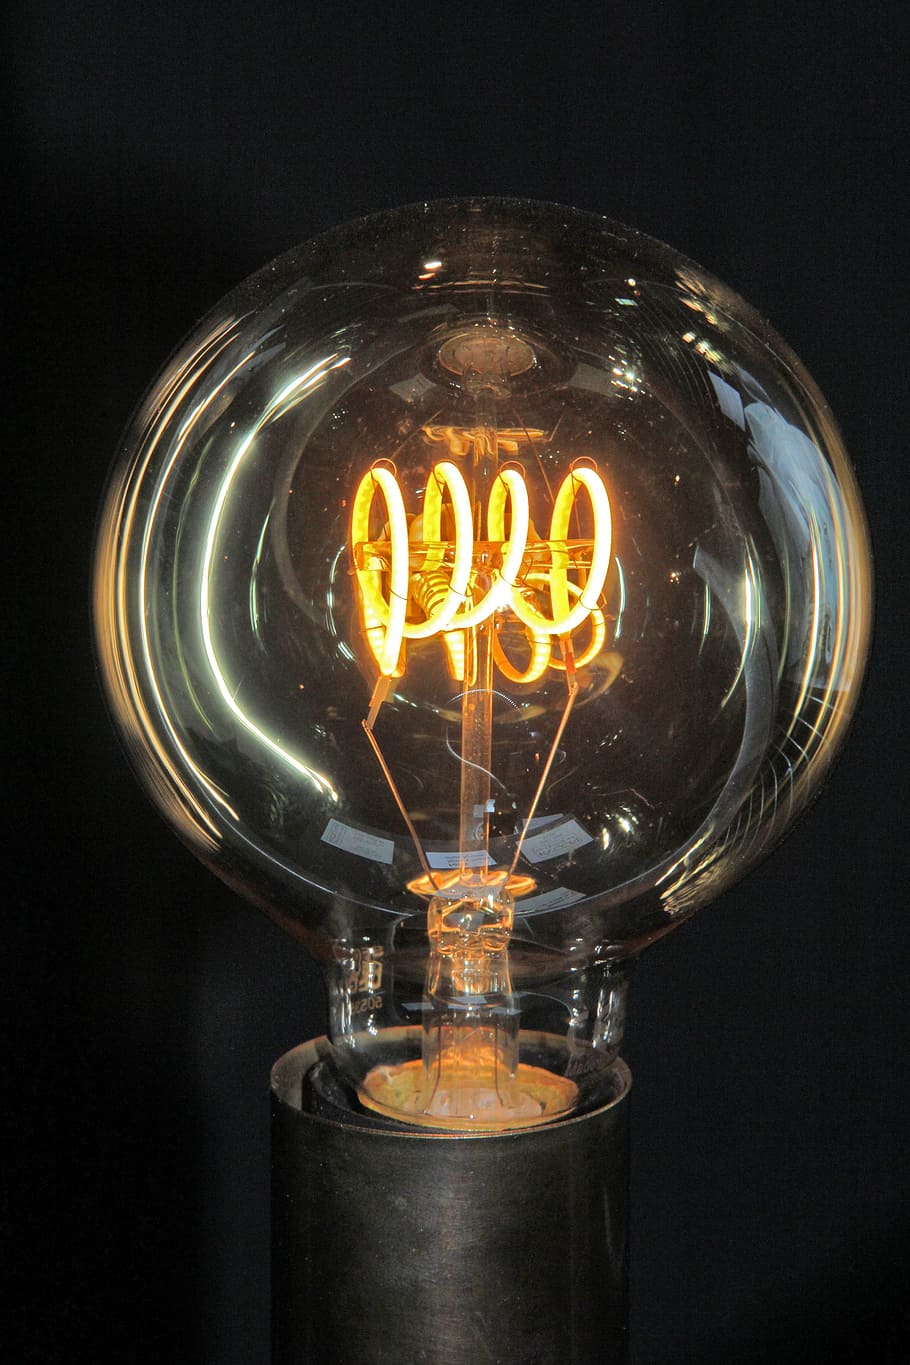 Bulb, Filament, Electricity, Lamp, light bulb, lighting equipment, illuminated, glowing, studio shot, close-up